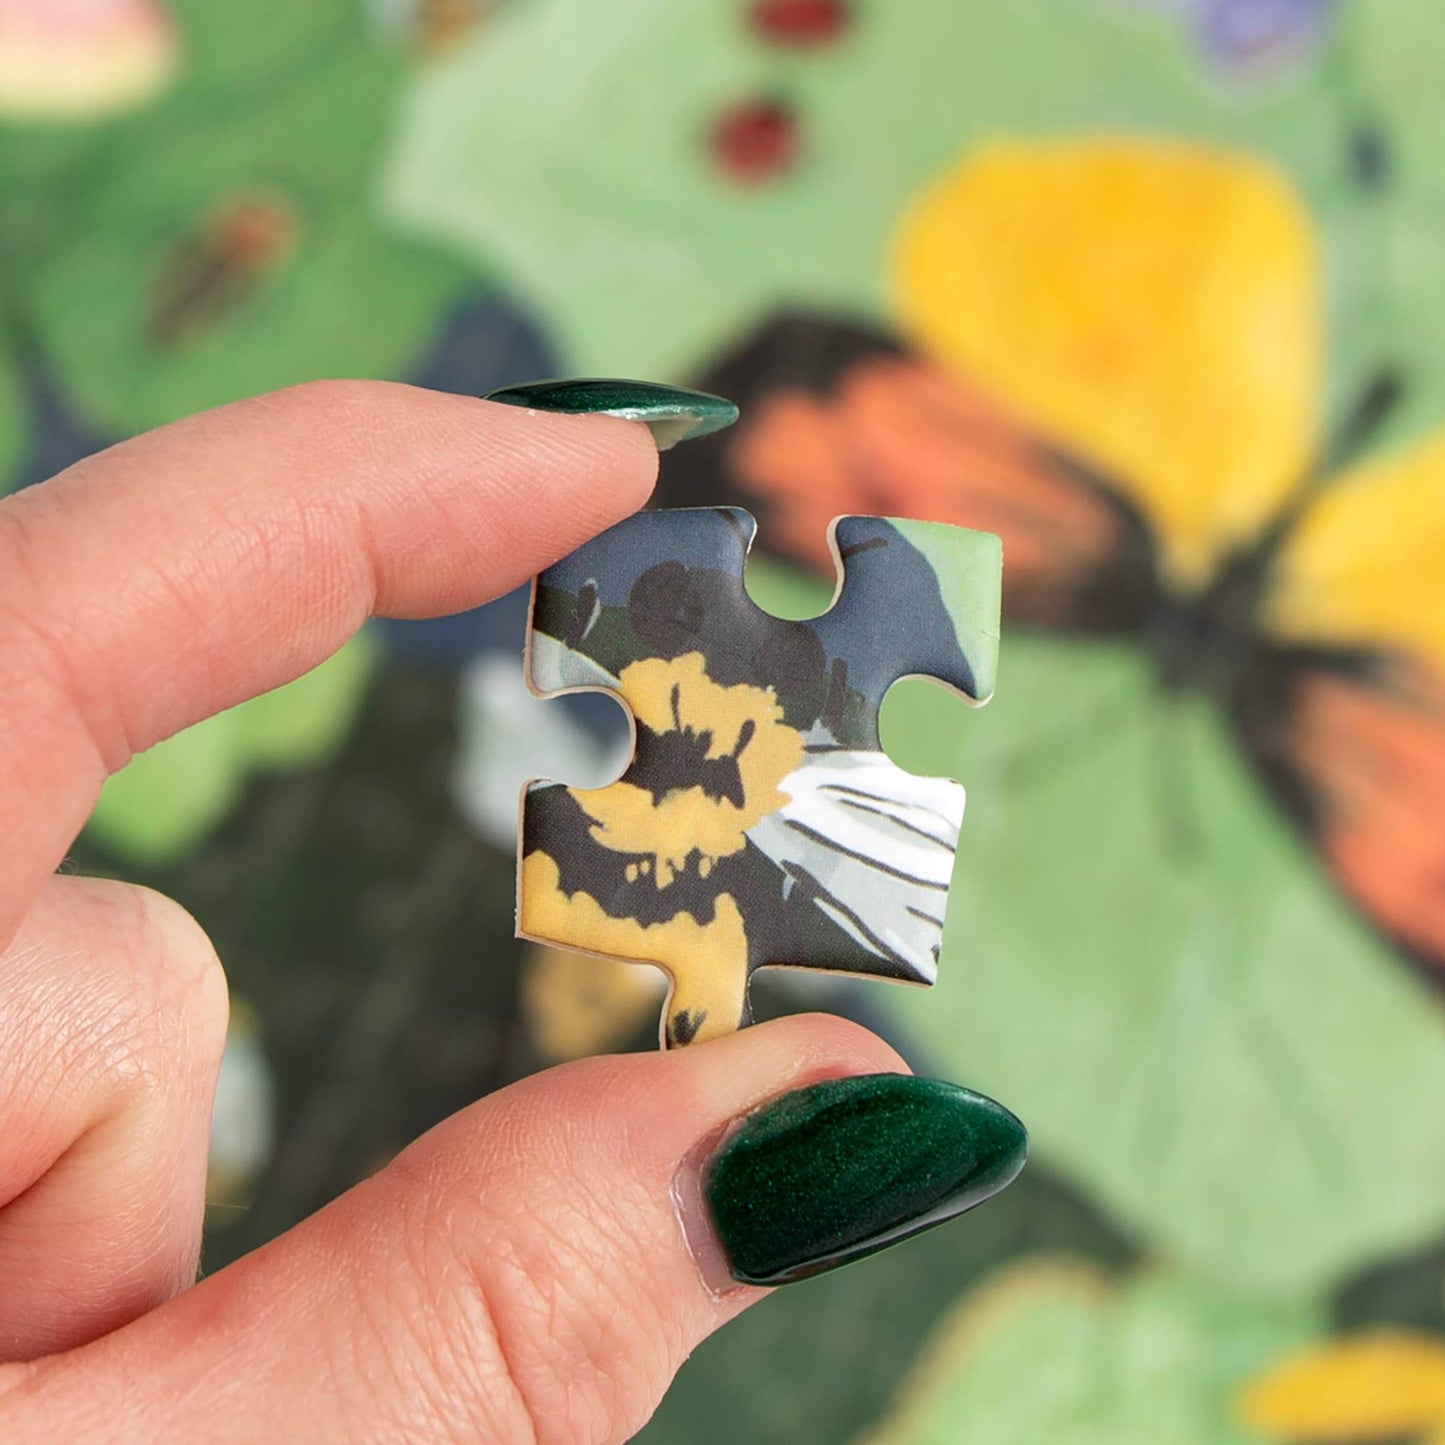 Pollinators - 500 Piece Jigsaw Puzzle